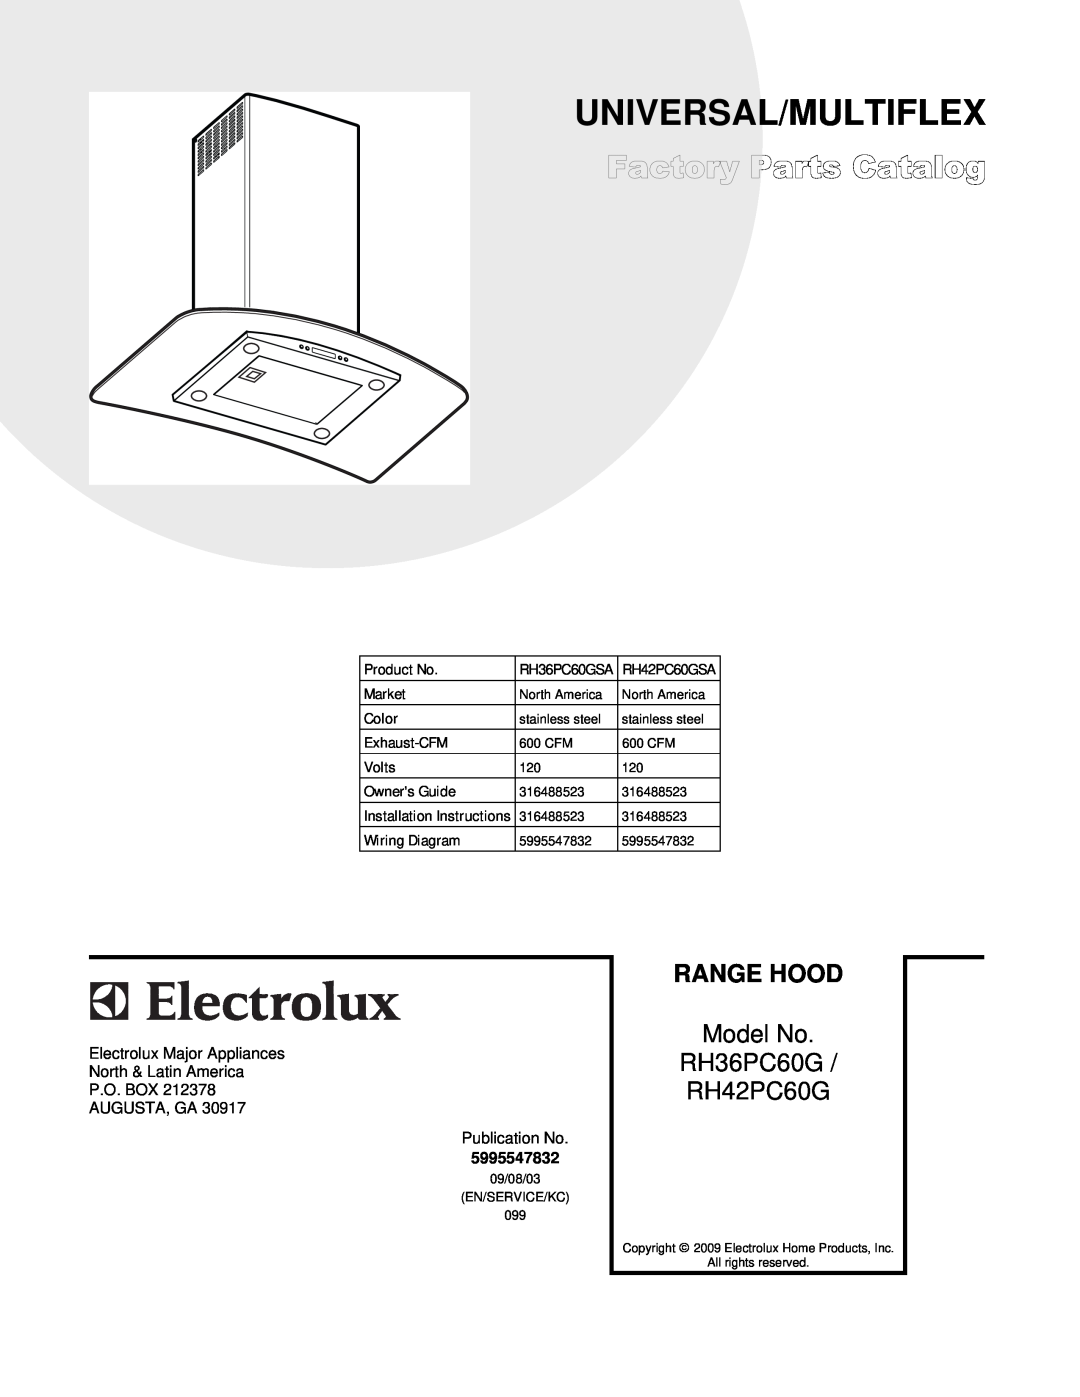 Electrolux installation instructions Universal/Multiflex, Range Hood, Model No RH36PC60G RH42PC60G, SE1RBA.eps 